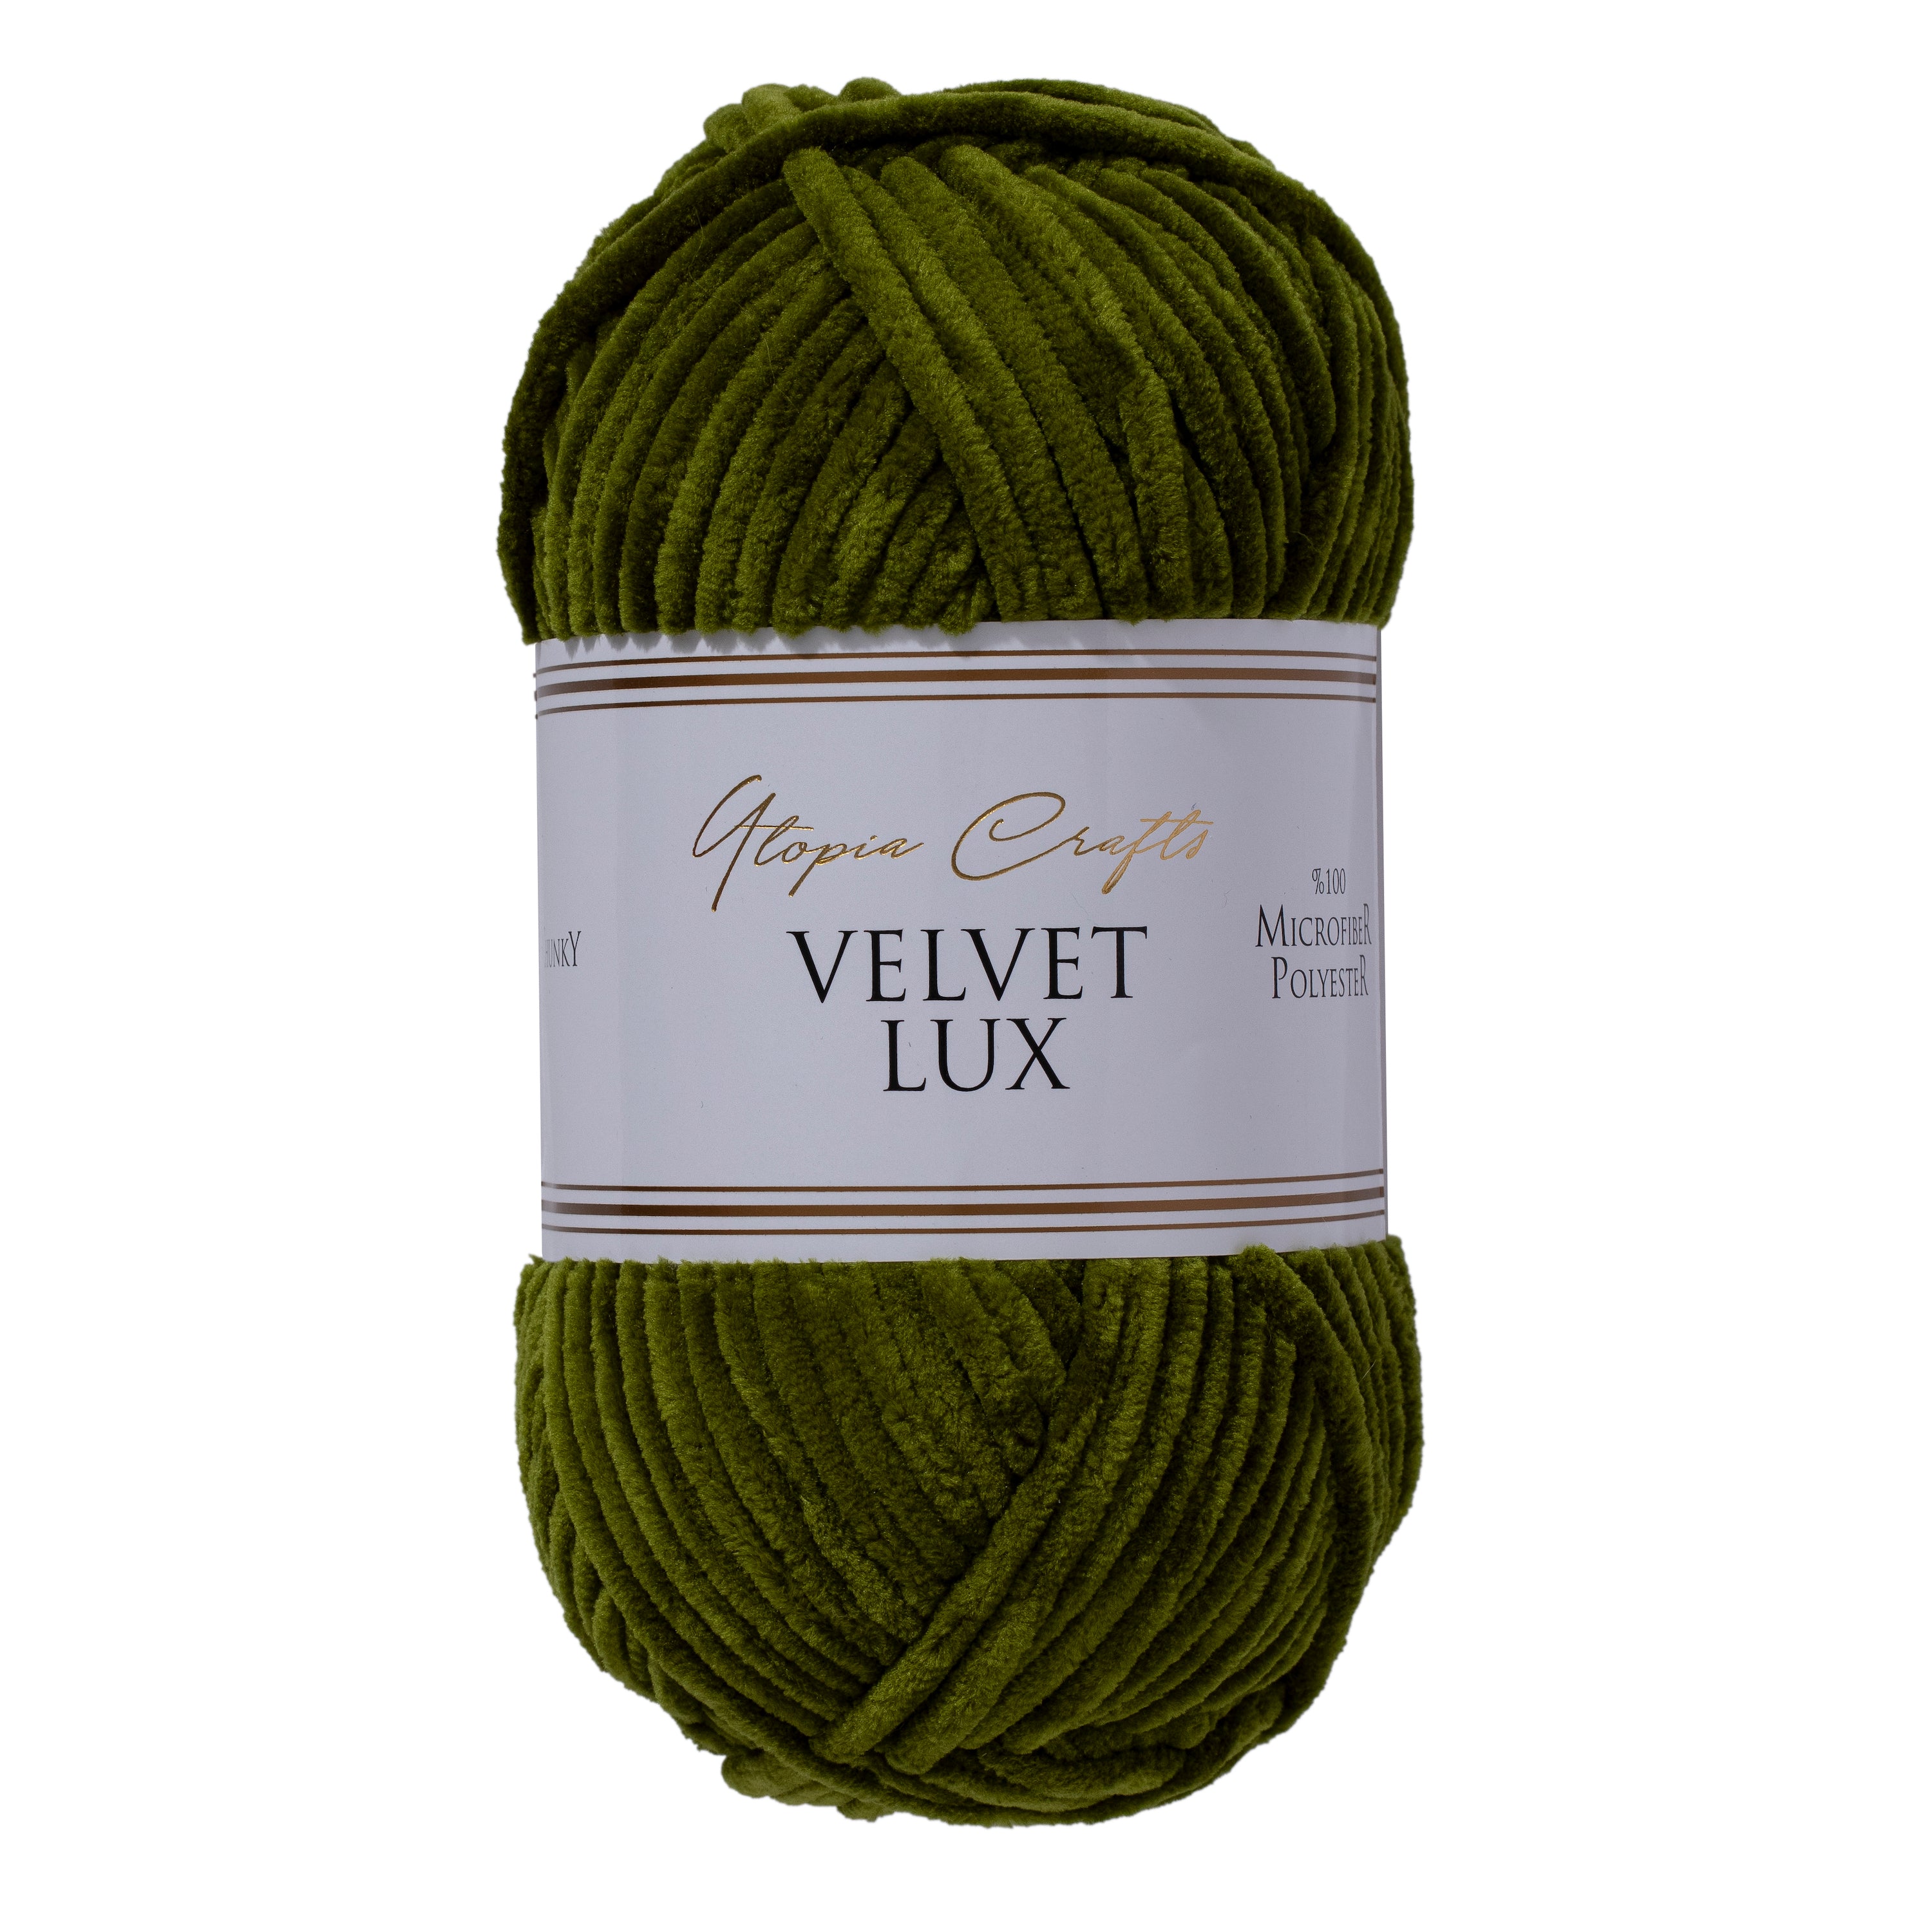 Utopia Crafts Velvet Lux Chenille Super Soft Chunky Yarn for Knitting and Crochet, 100g - 110m (Dark Olive)